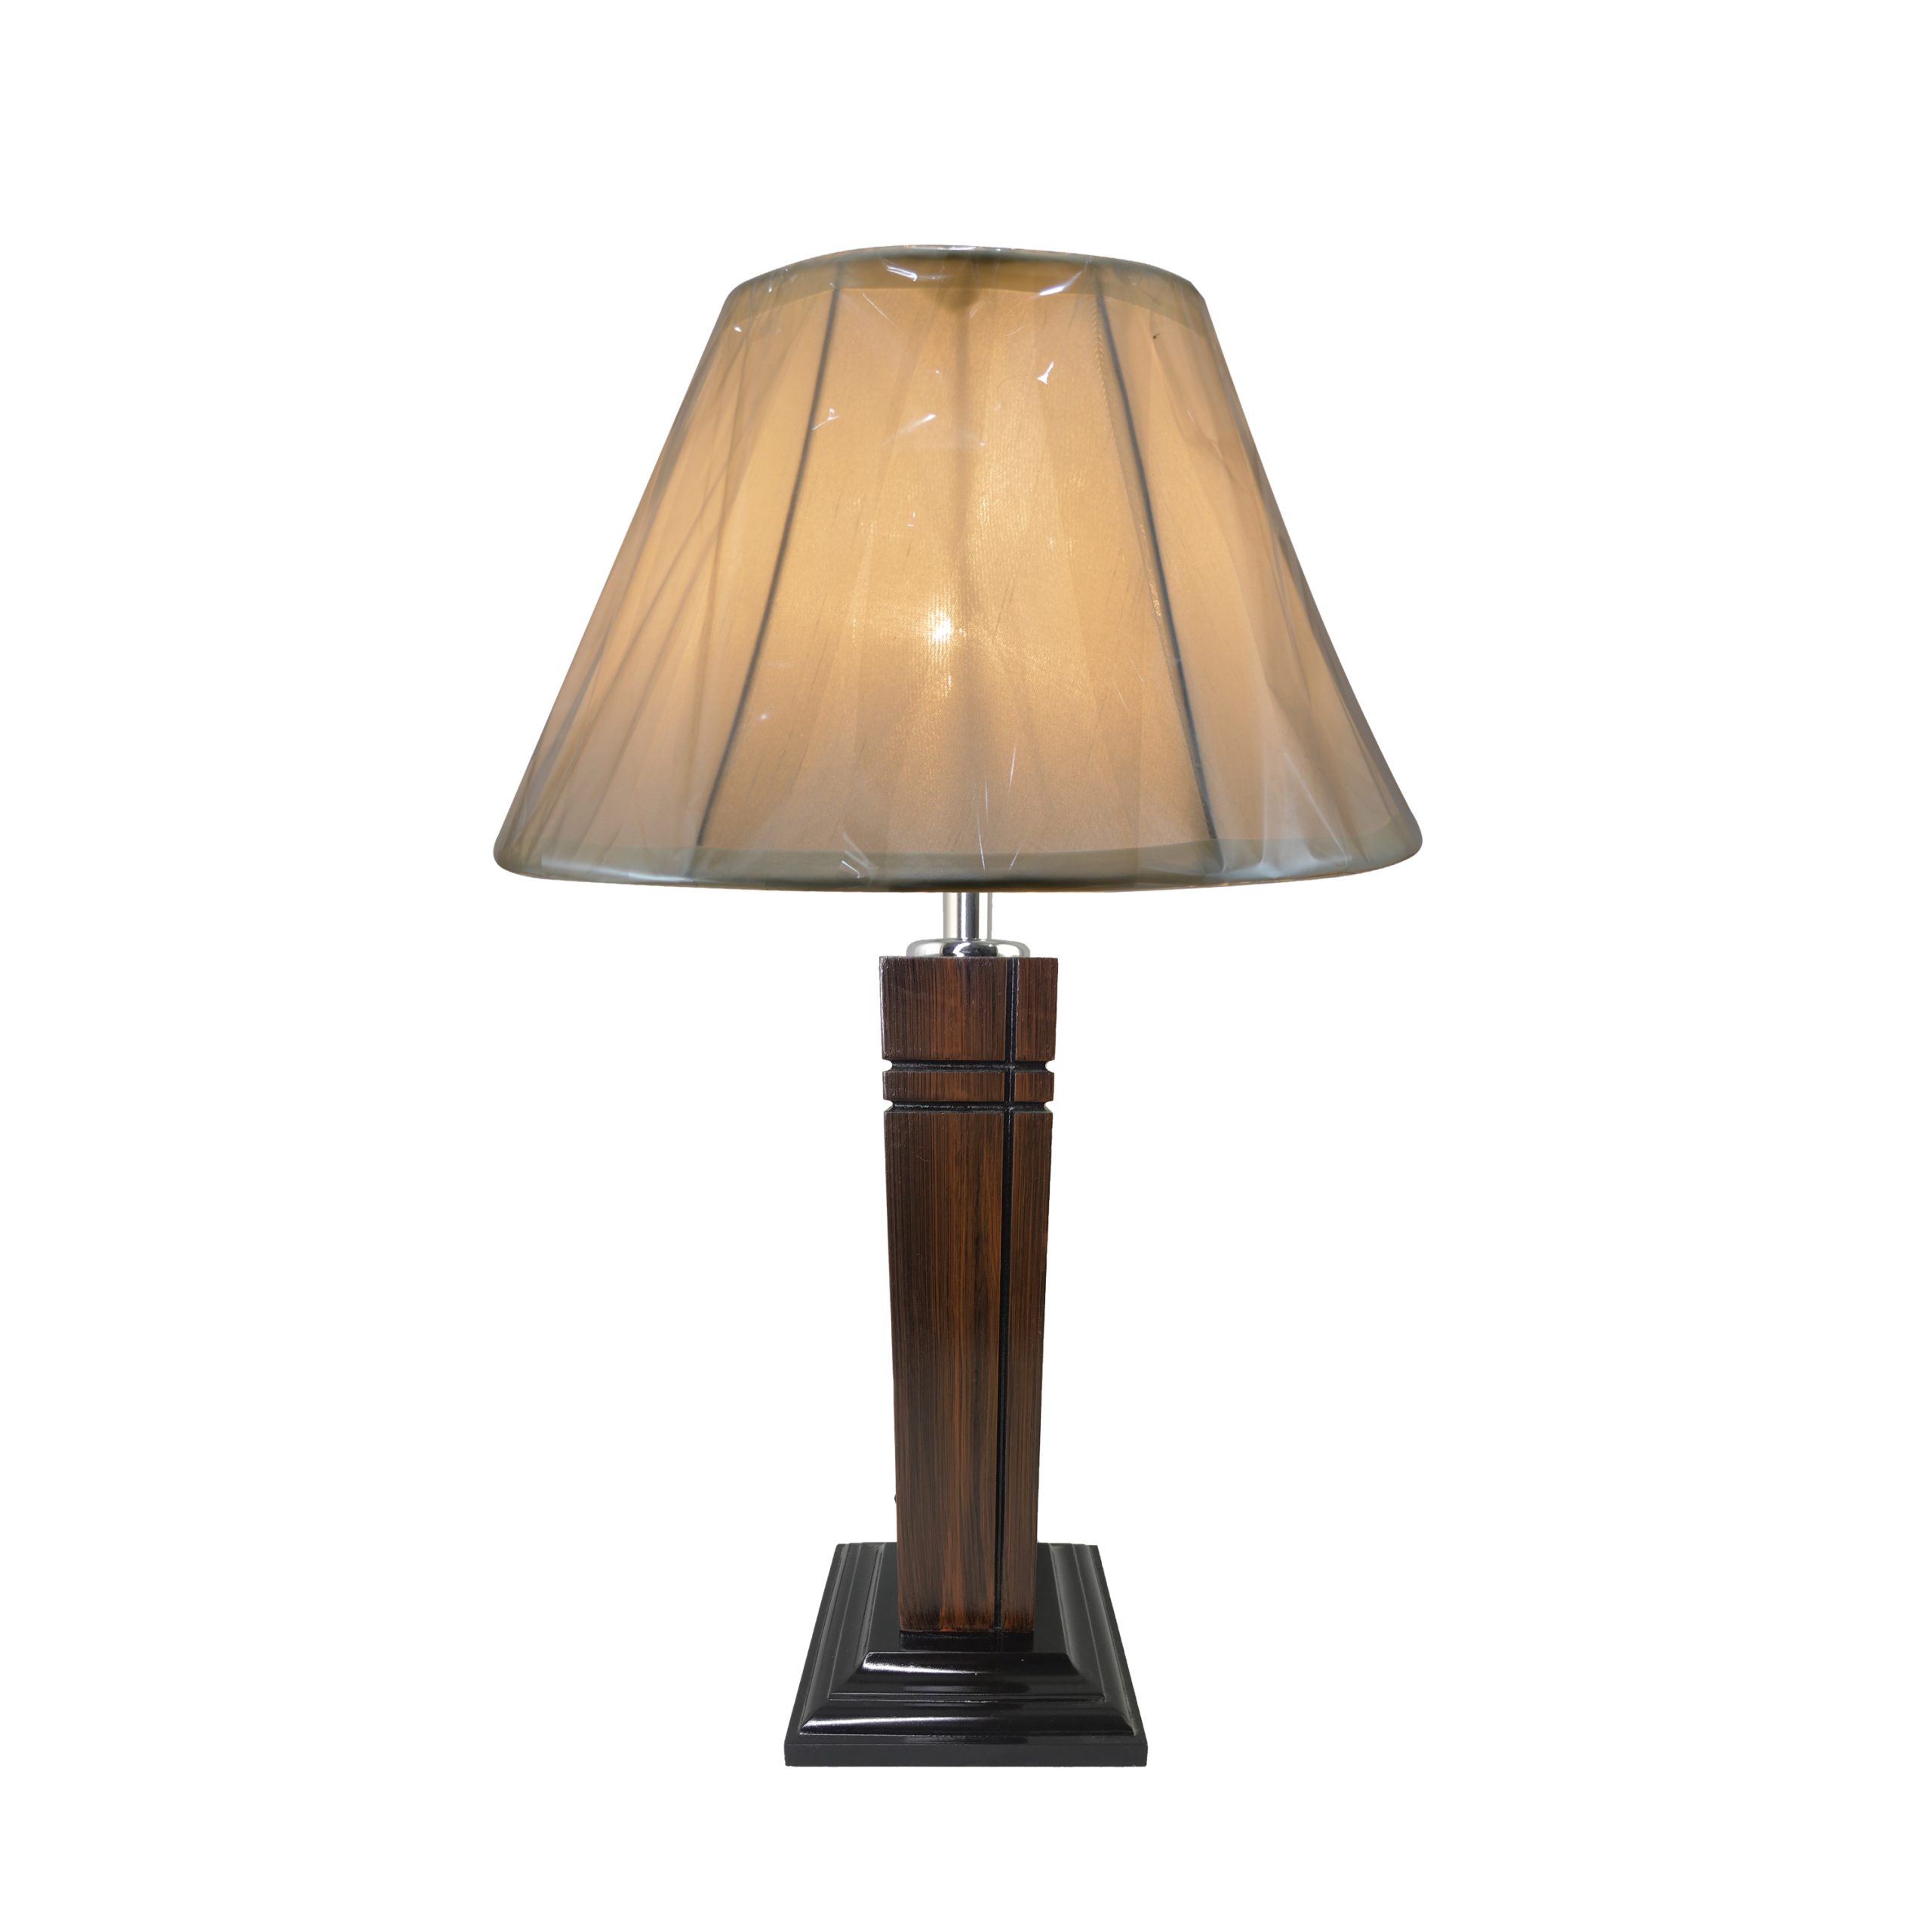 Lamp-5-6-scaled-1.jpg